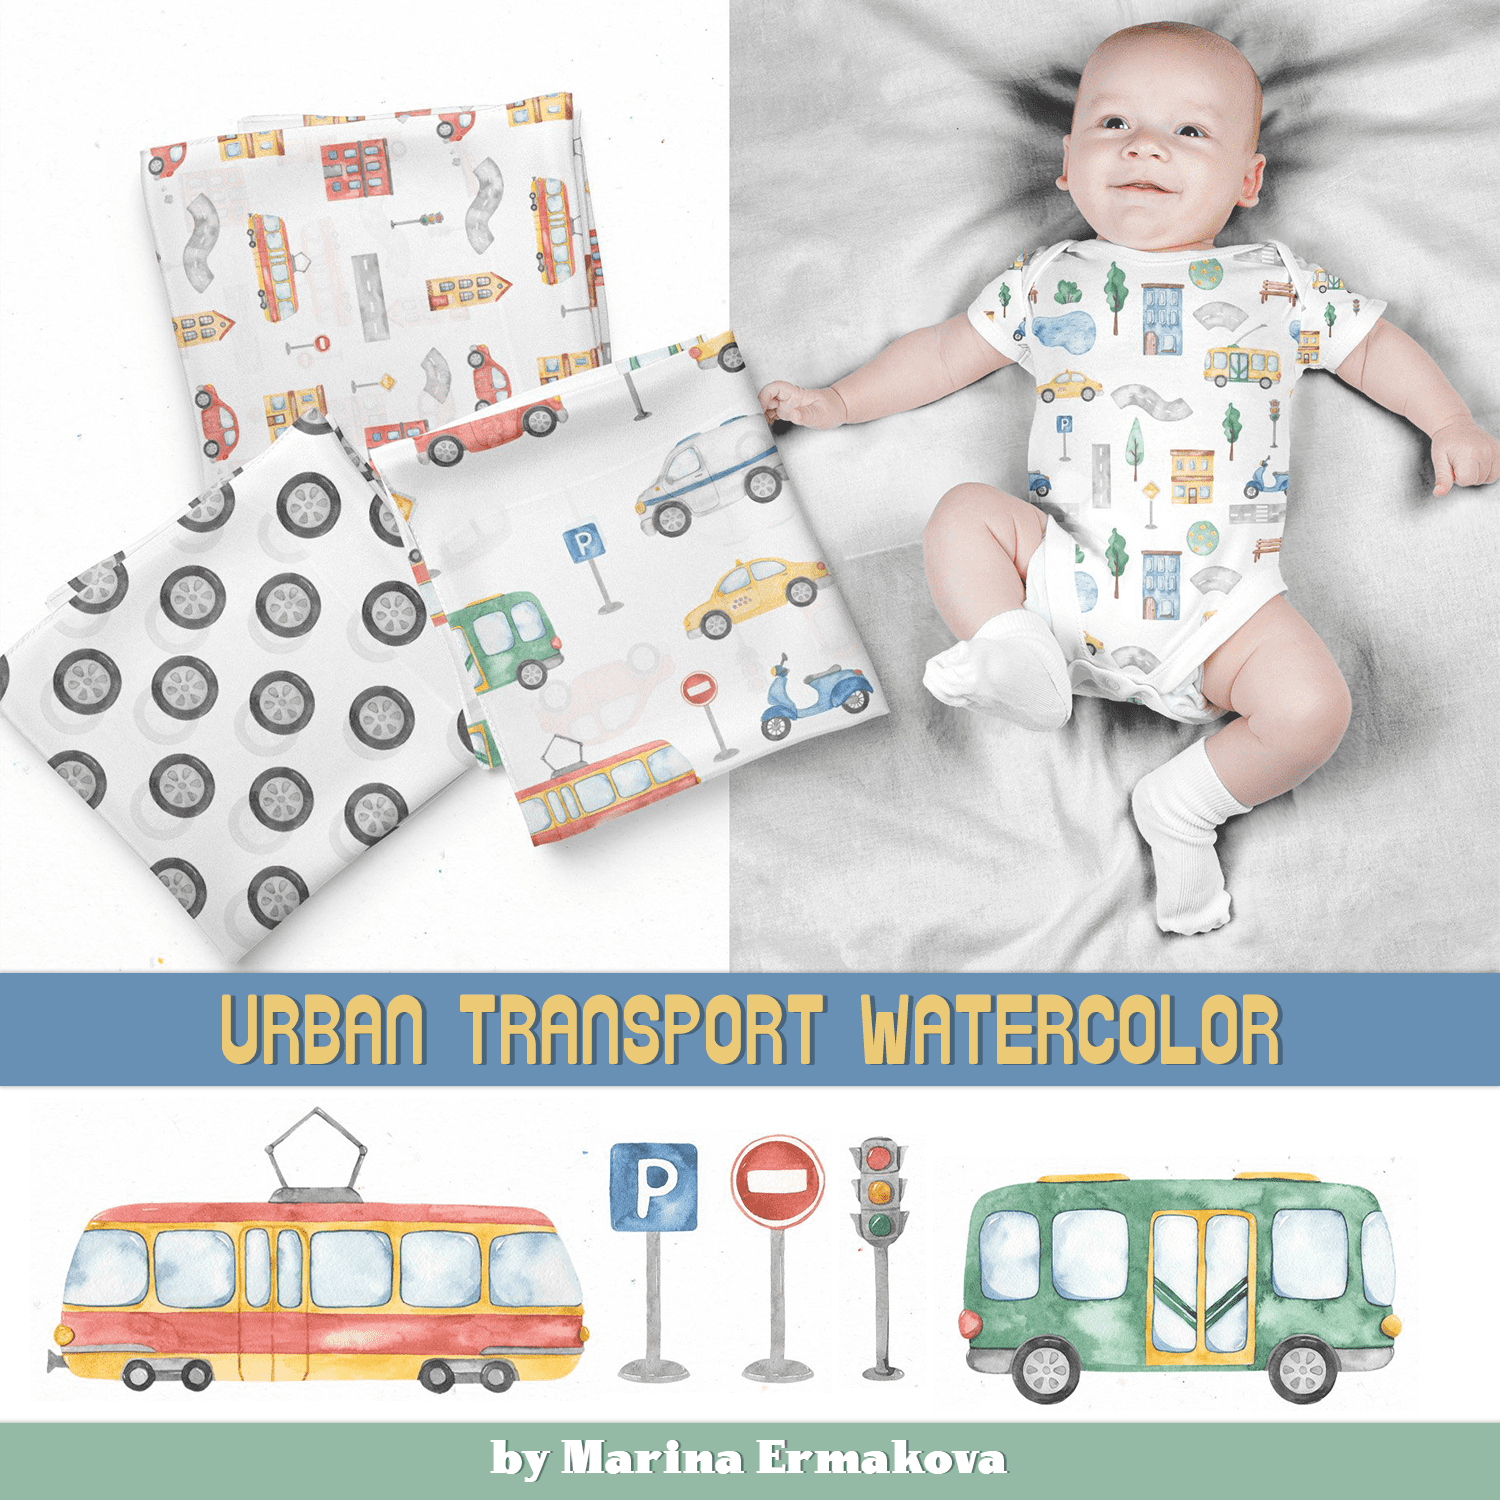 Urban transport watercolor cover.